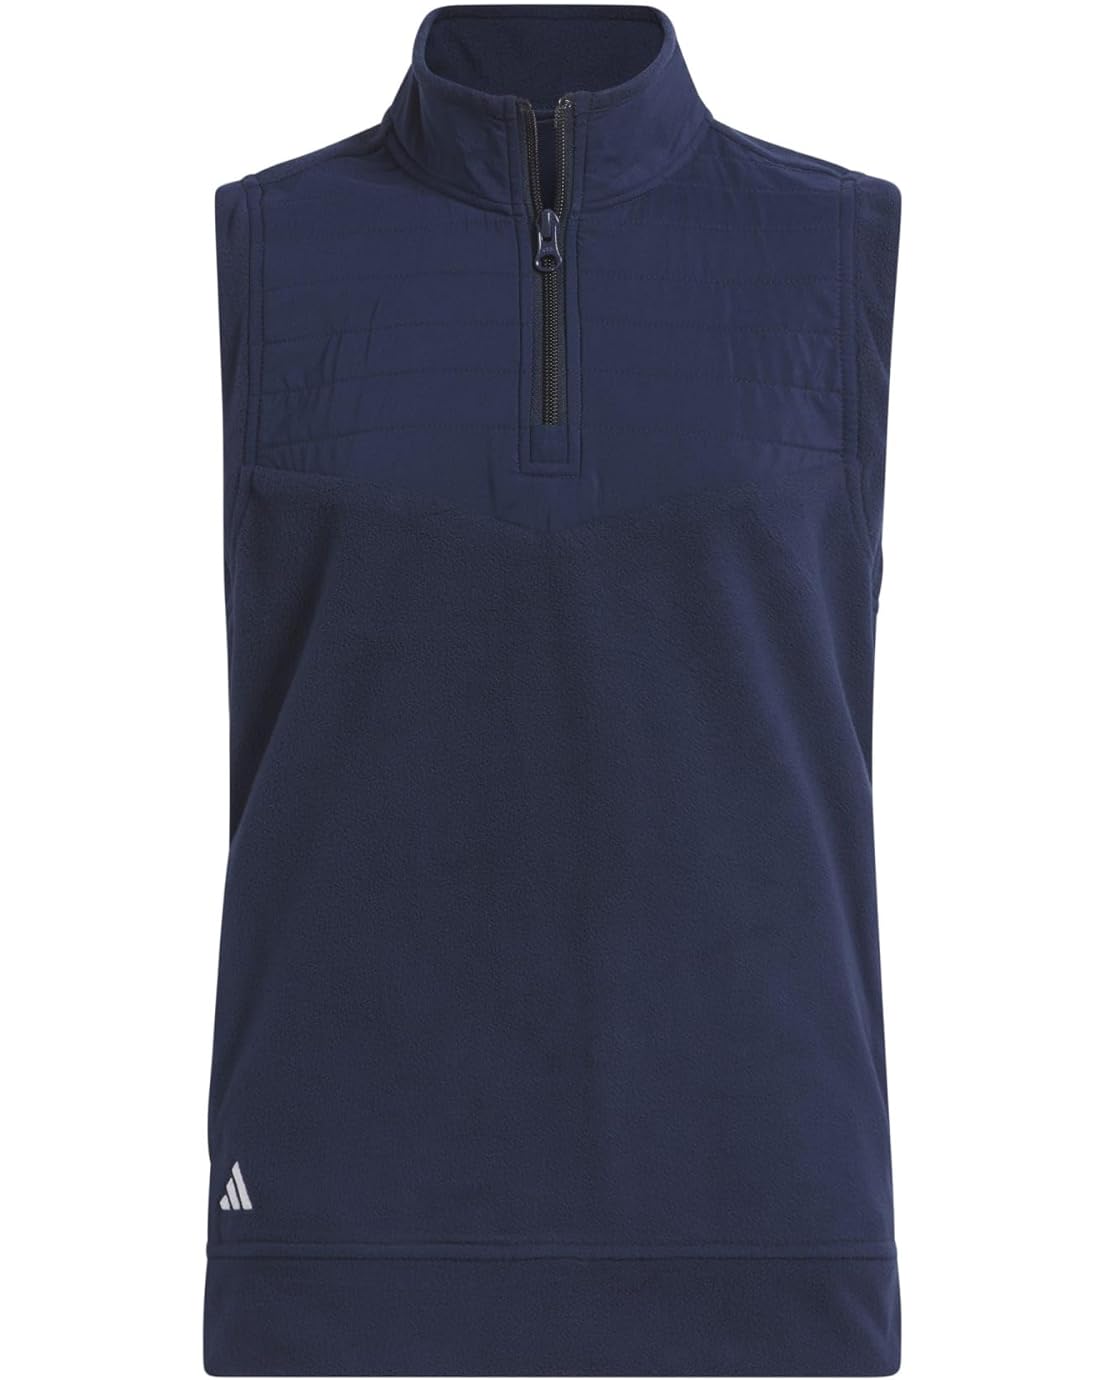 adidas Golf Kids Fleece Layering Vest (Little Kids/Big Kids)